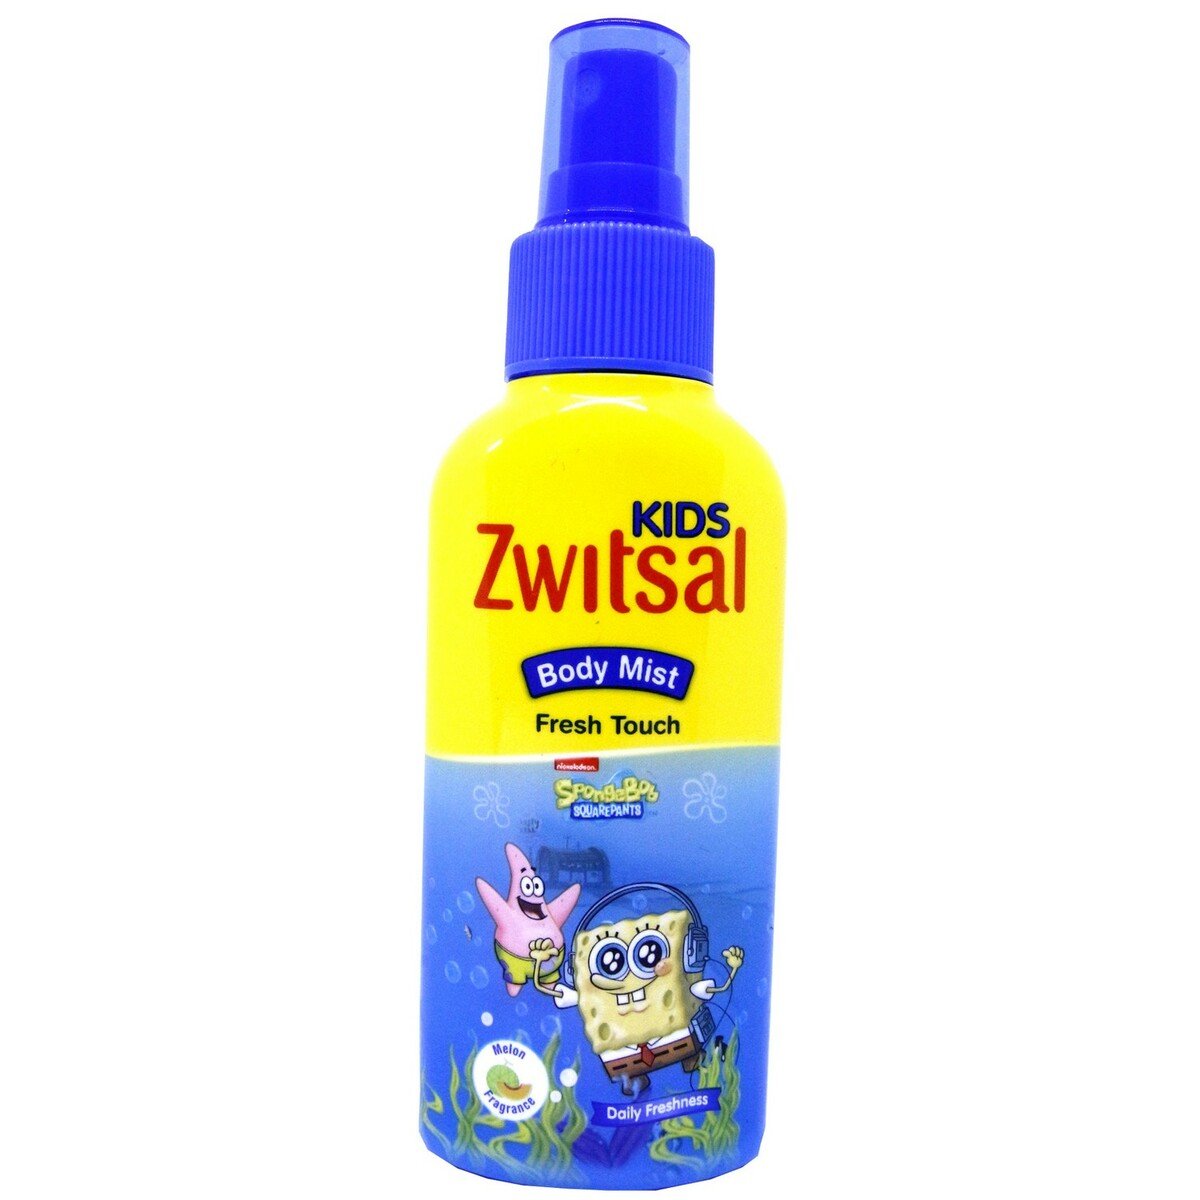 Zwitsal Kids Body Mist Fresh Touch 100ml